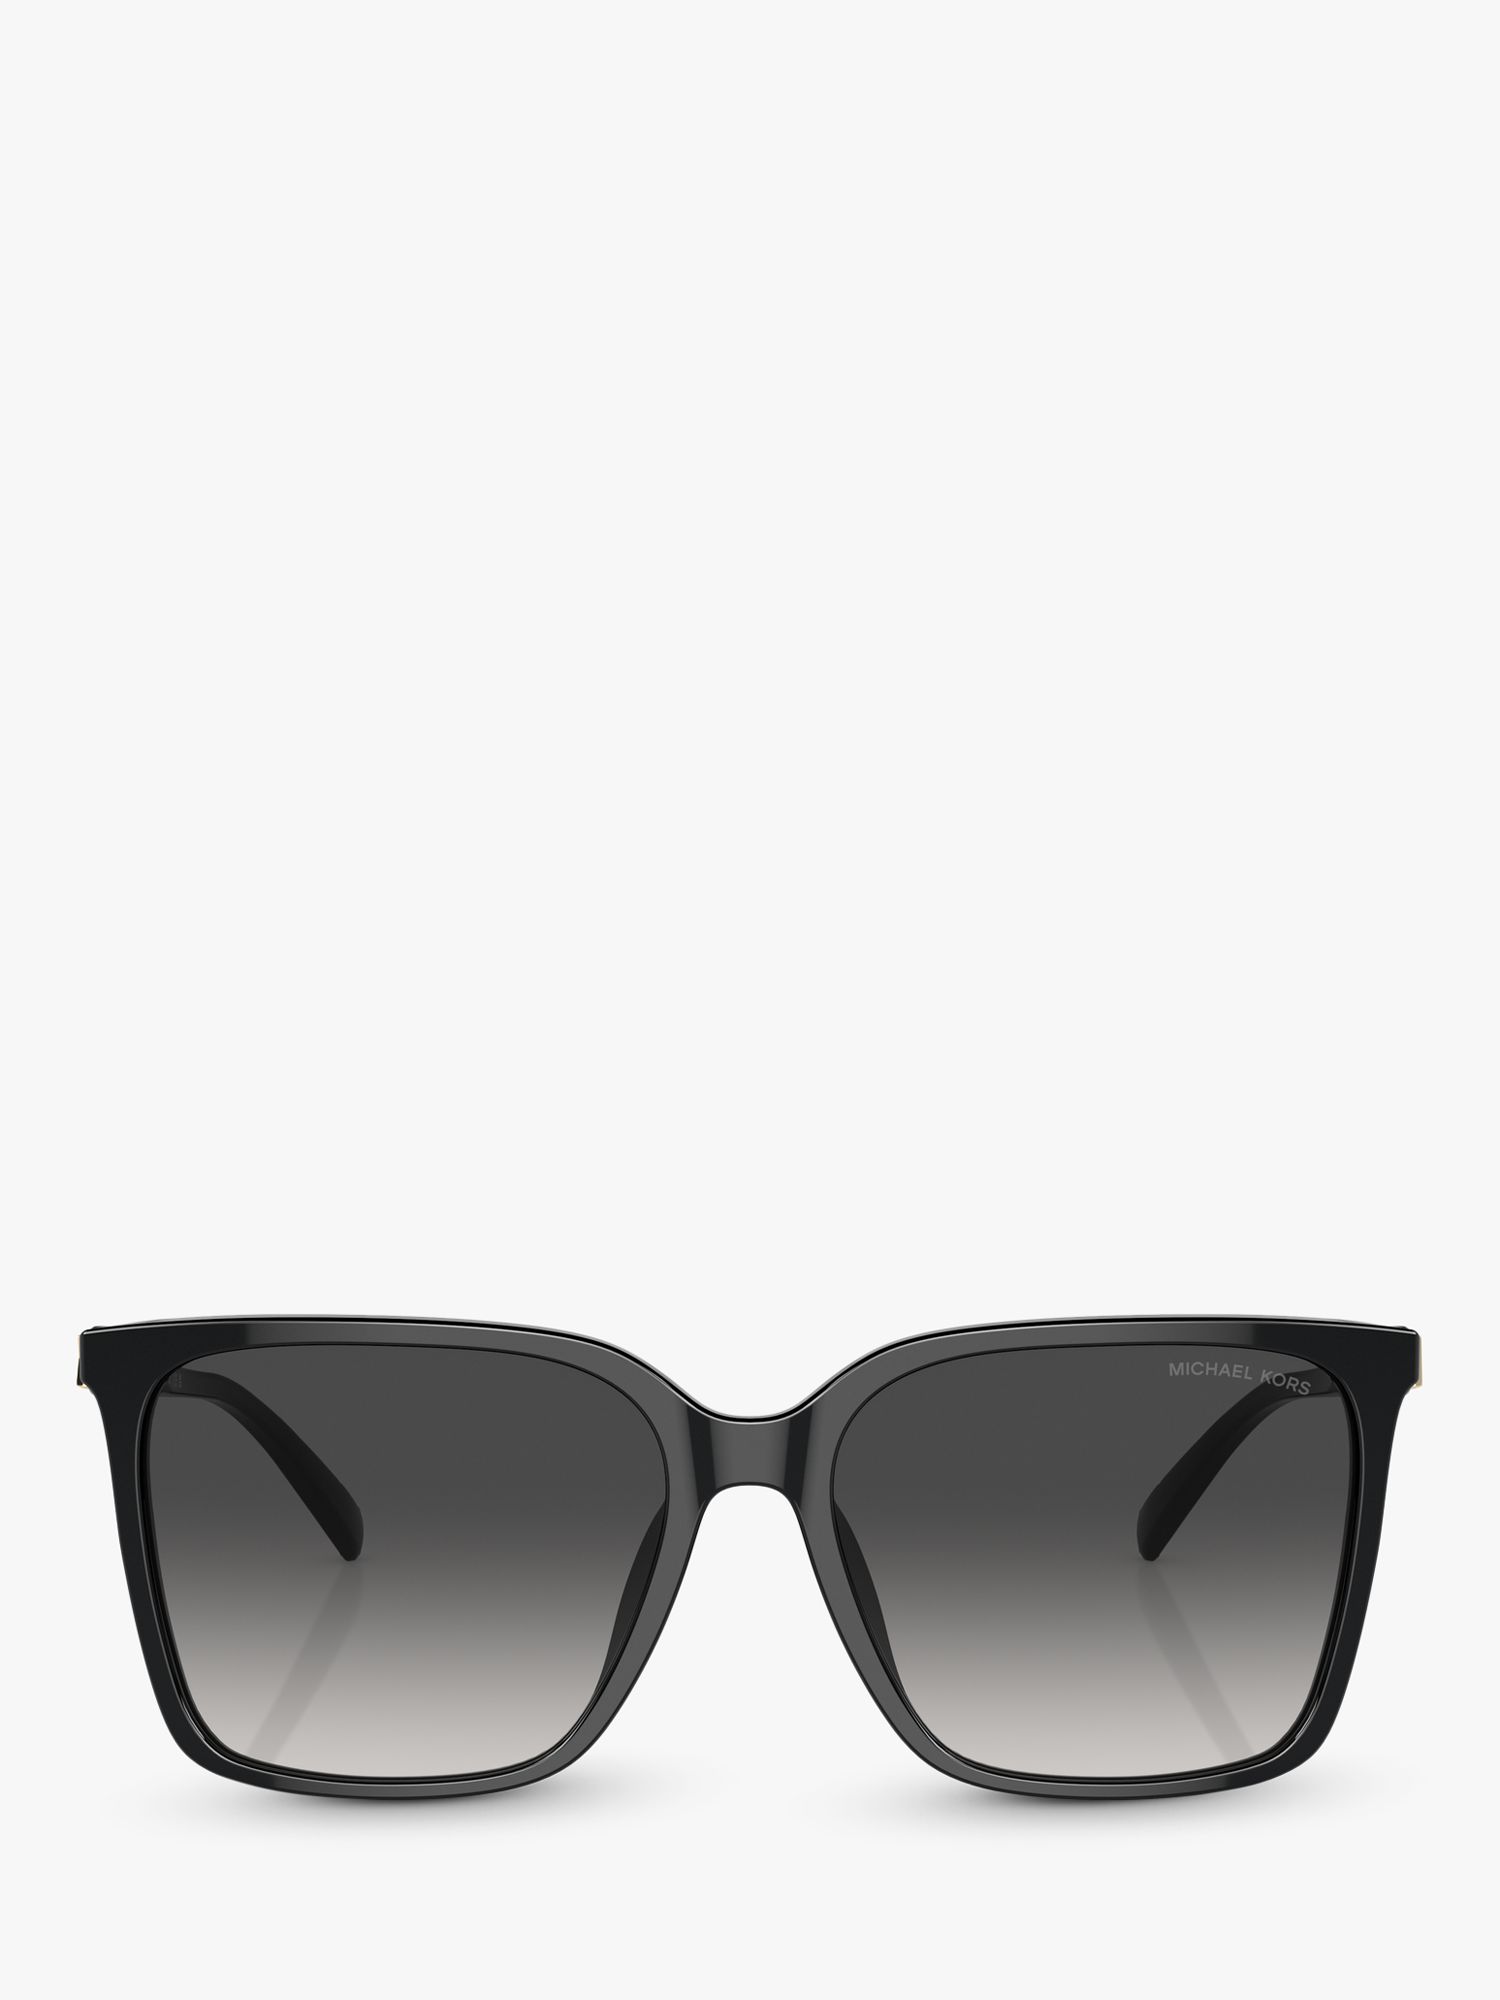 Michael Kors MK2197F Women's Square Sunglasses, Black/Grey Gradient